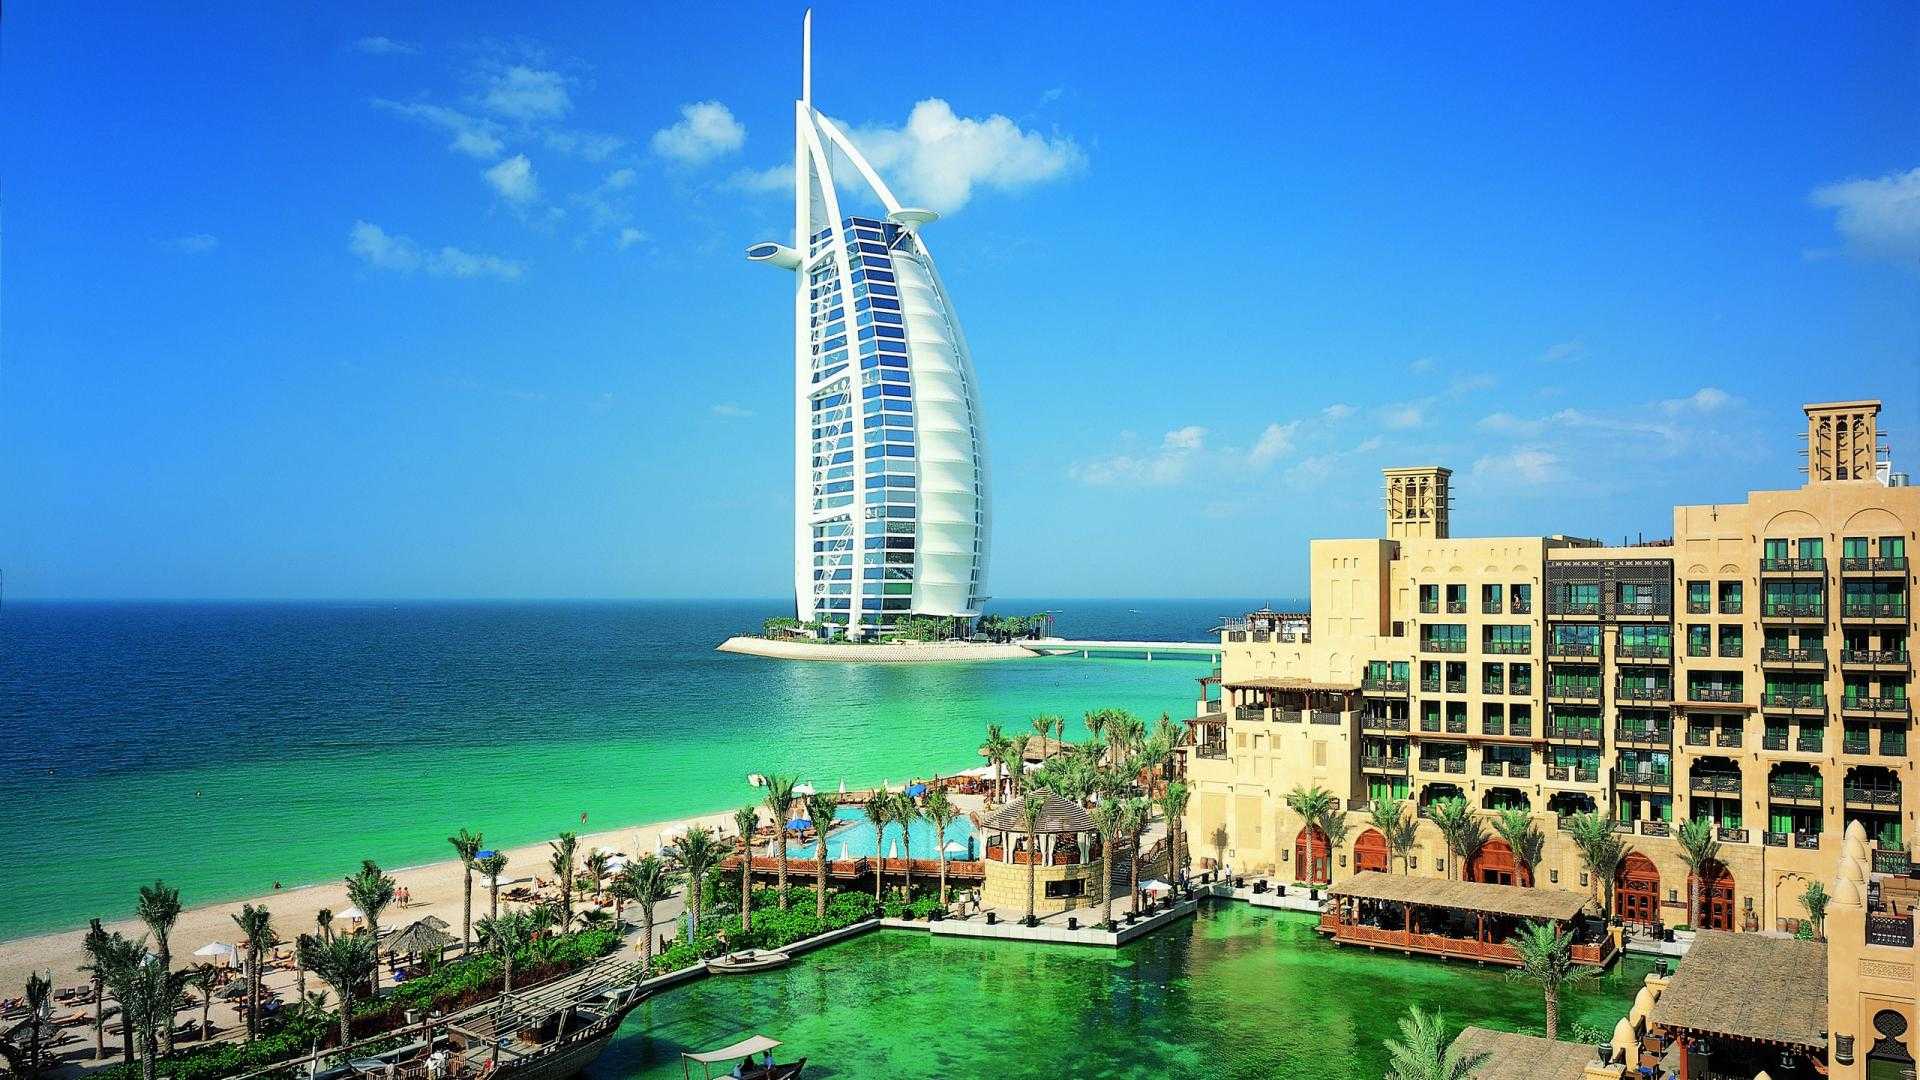 Inexpensive 5 days Dubai tour on budget